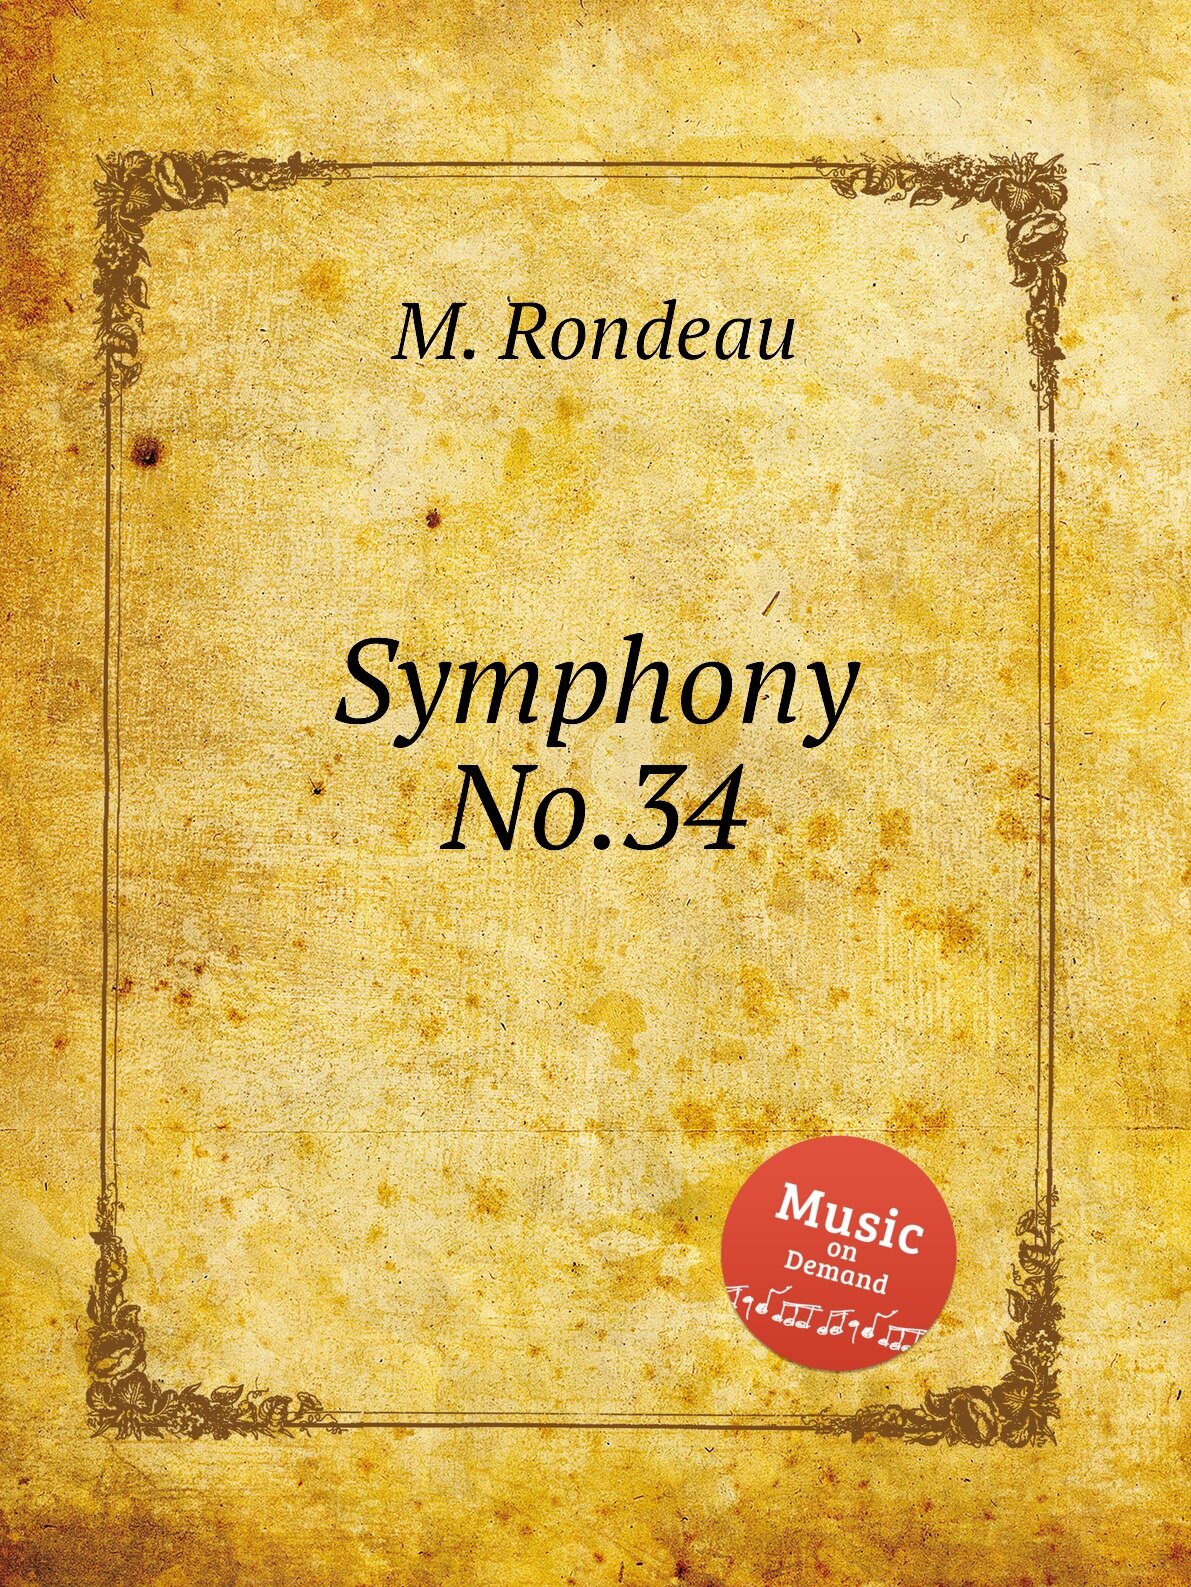 Symphony No.34